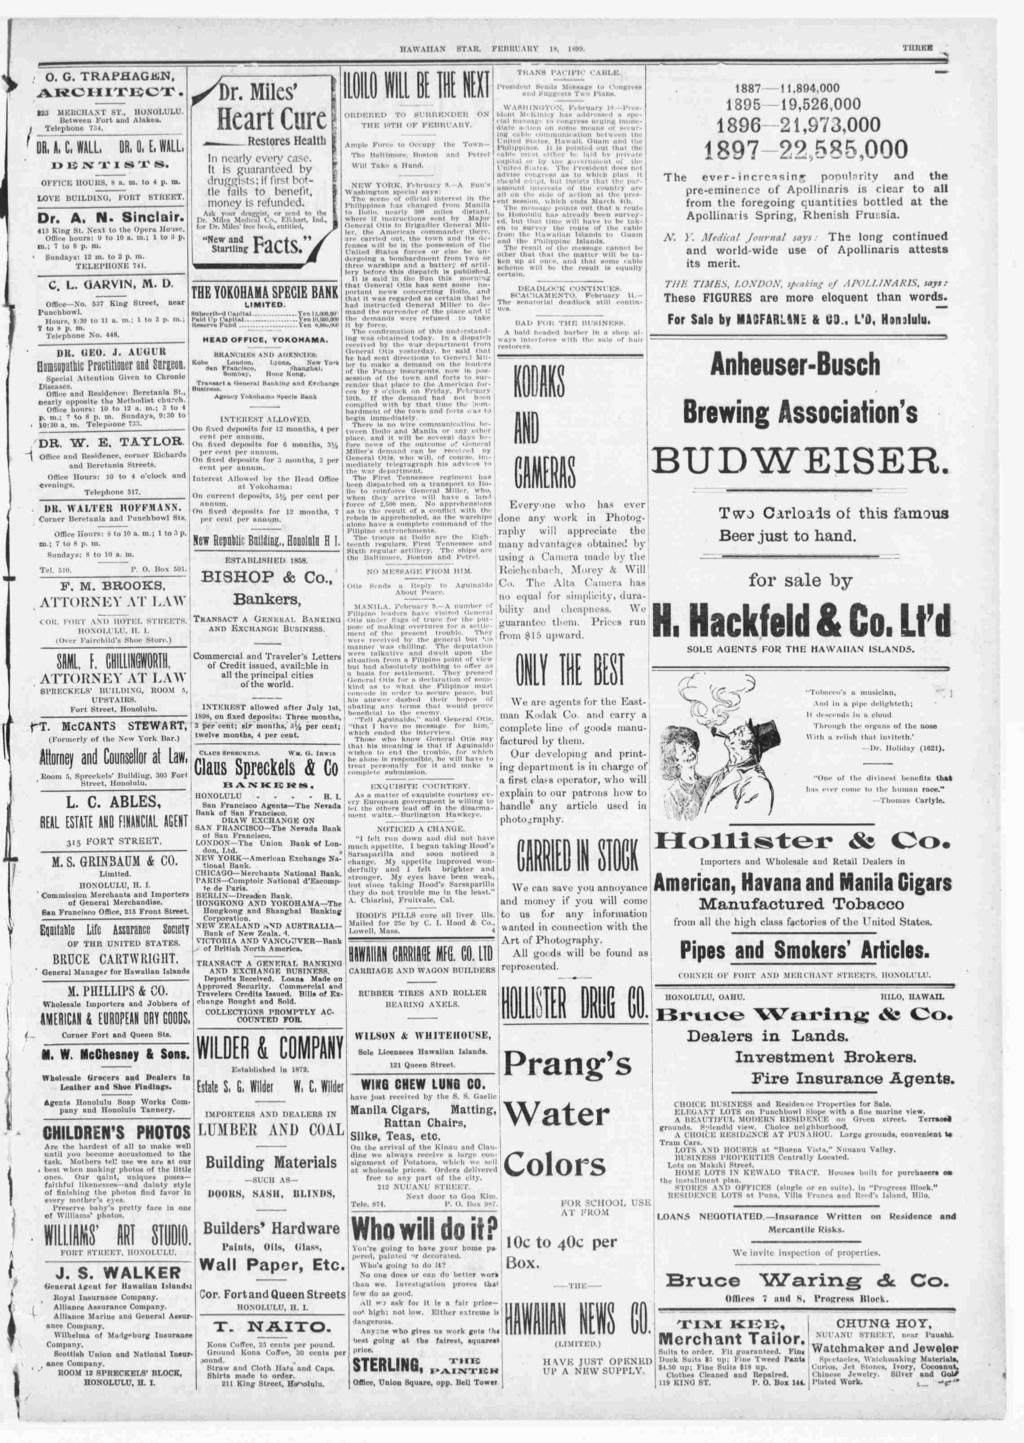 "A" HAWAAN STAR, FEBRUARY 18, 1899. THREE O. G. TRAPHAGJbJN, 823 MERCHANT ST., HONOLULU. Between Fort Alakea. Telephone 734. DR. A. C. LL, DR. 0, E. LL, OFFCE HOURS, 8 n. n. to 4 p. m.